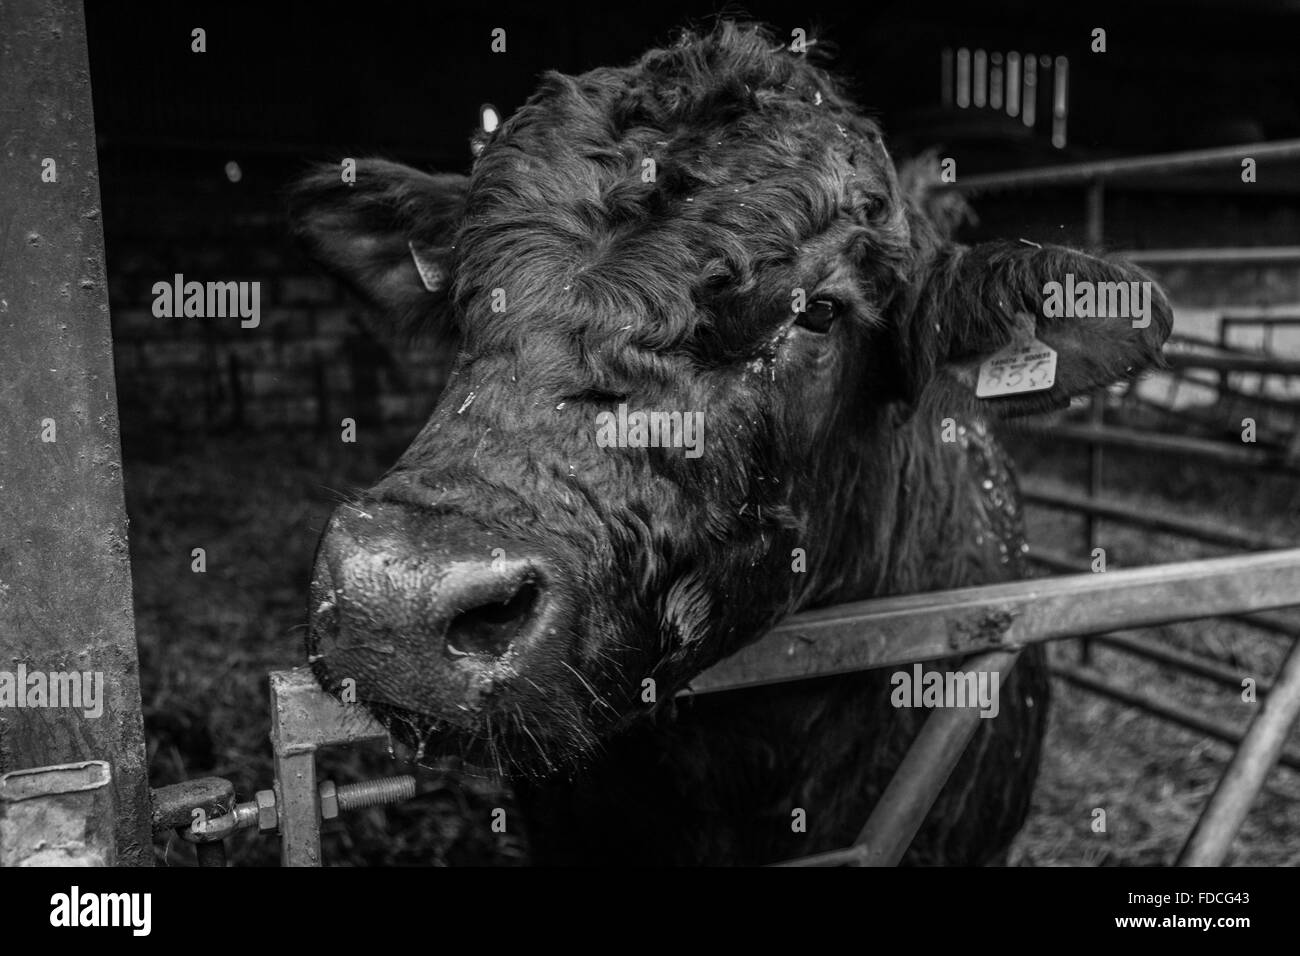 Bull on dairy farm Stock Photo